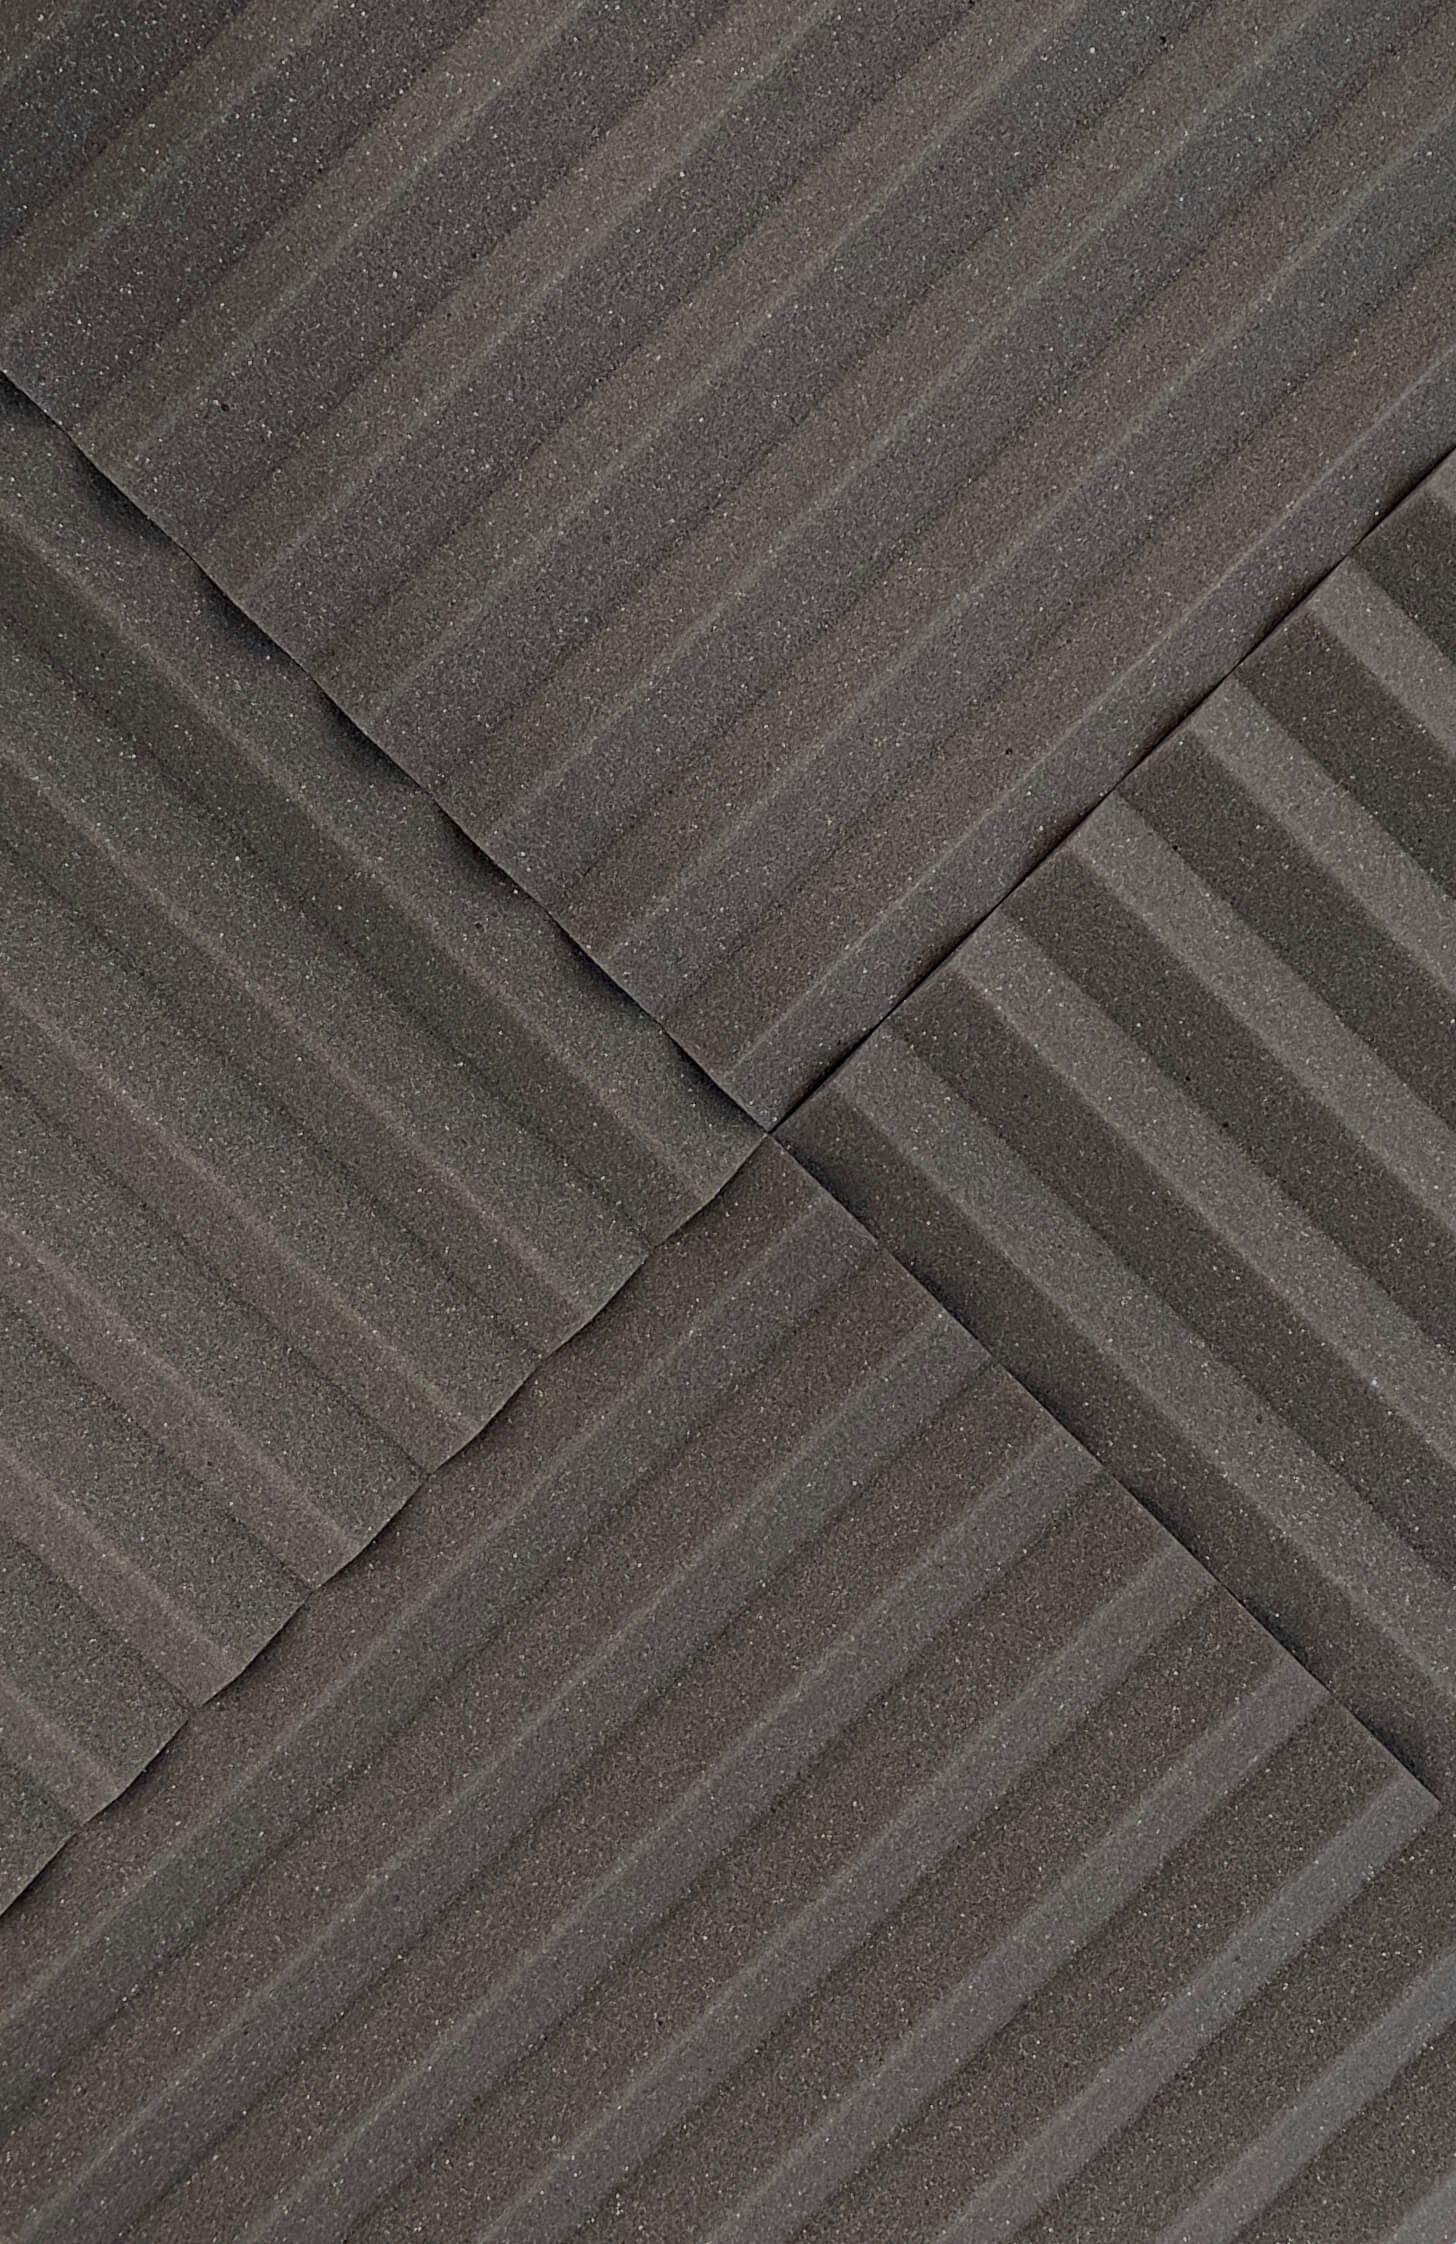 Wedge 12" Acoustic Studio Foam Tile Pack - 24 Tiles, 2.2qm Coverage